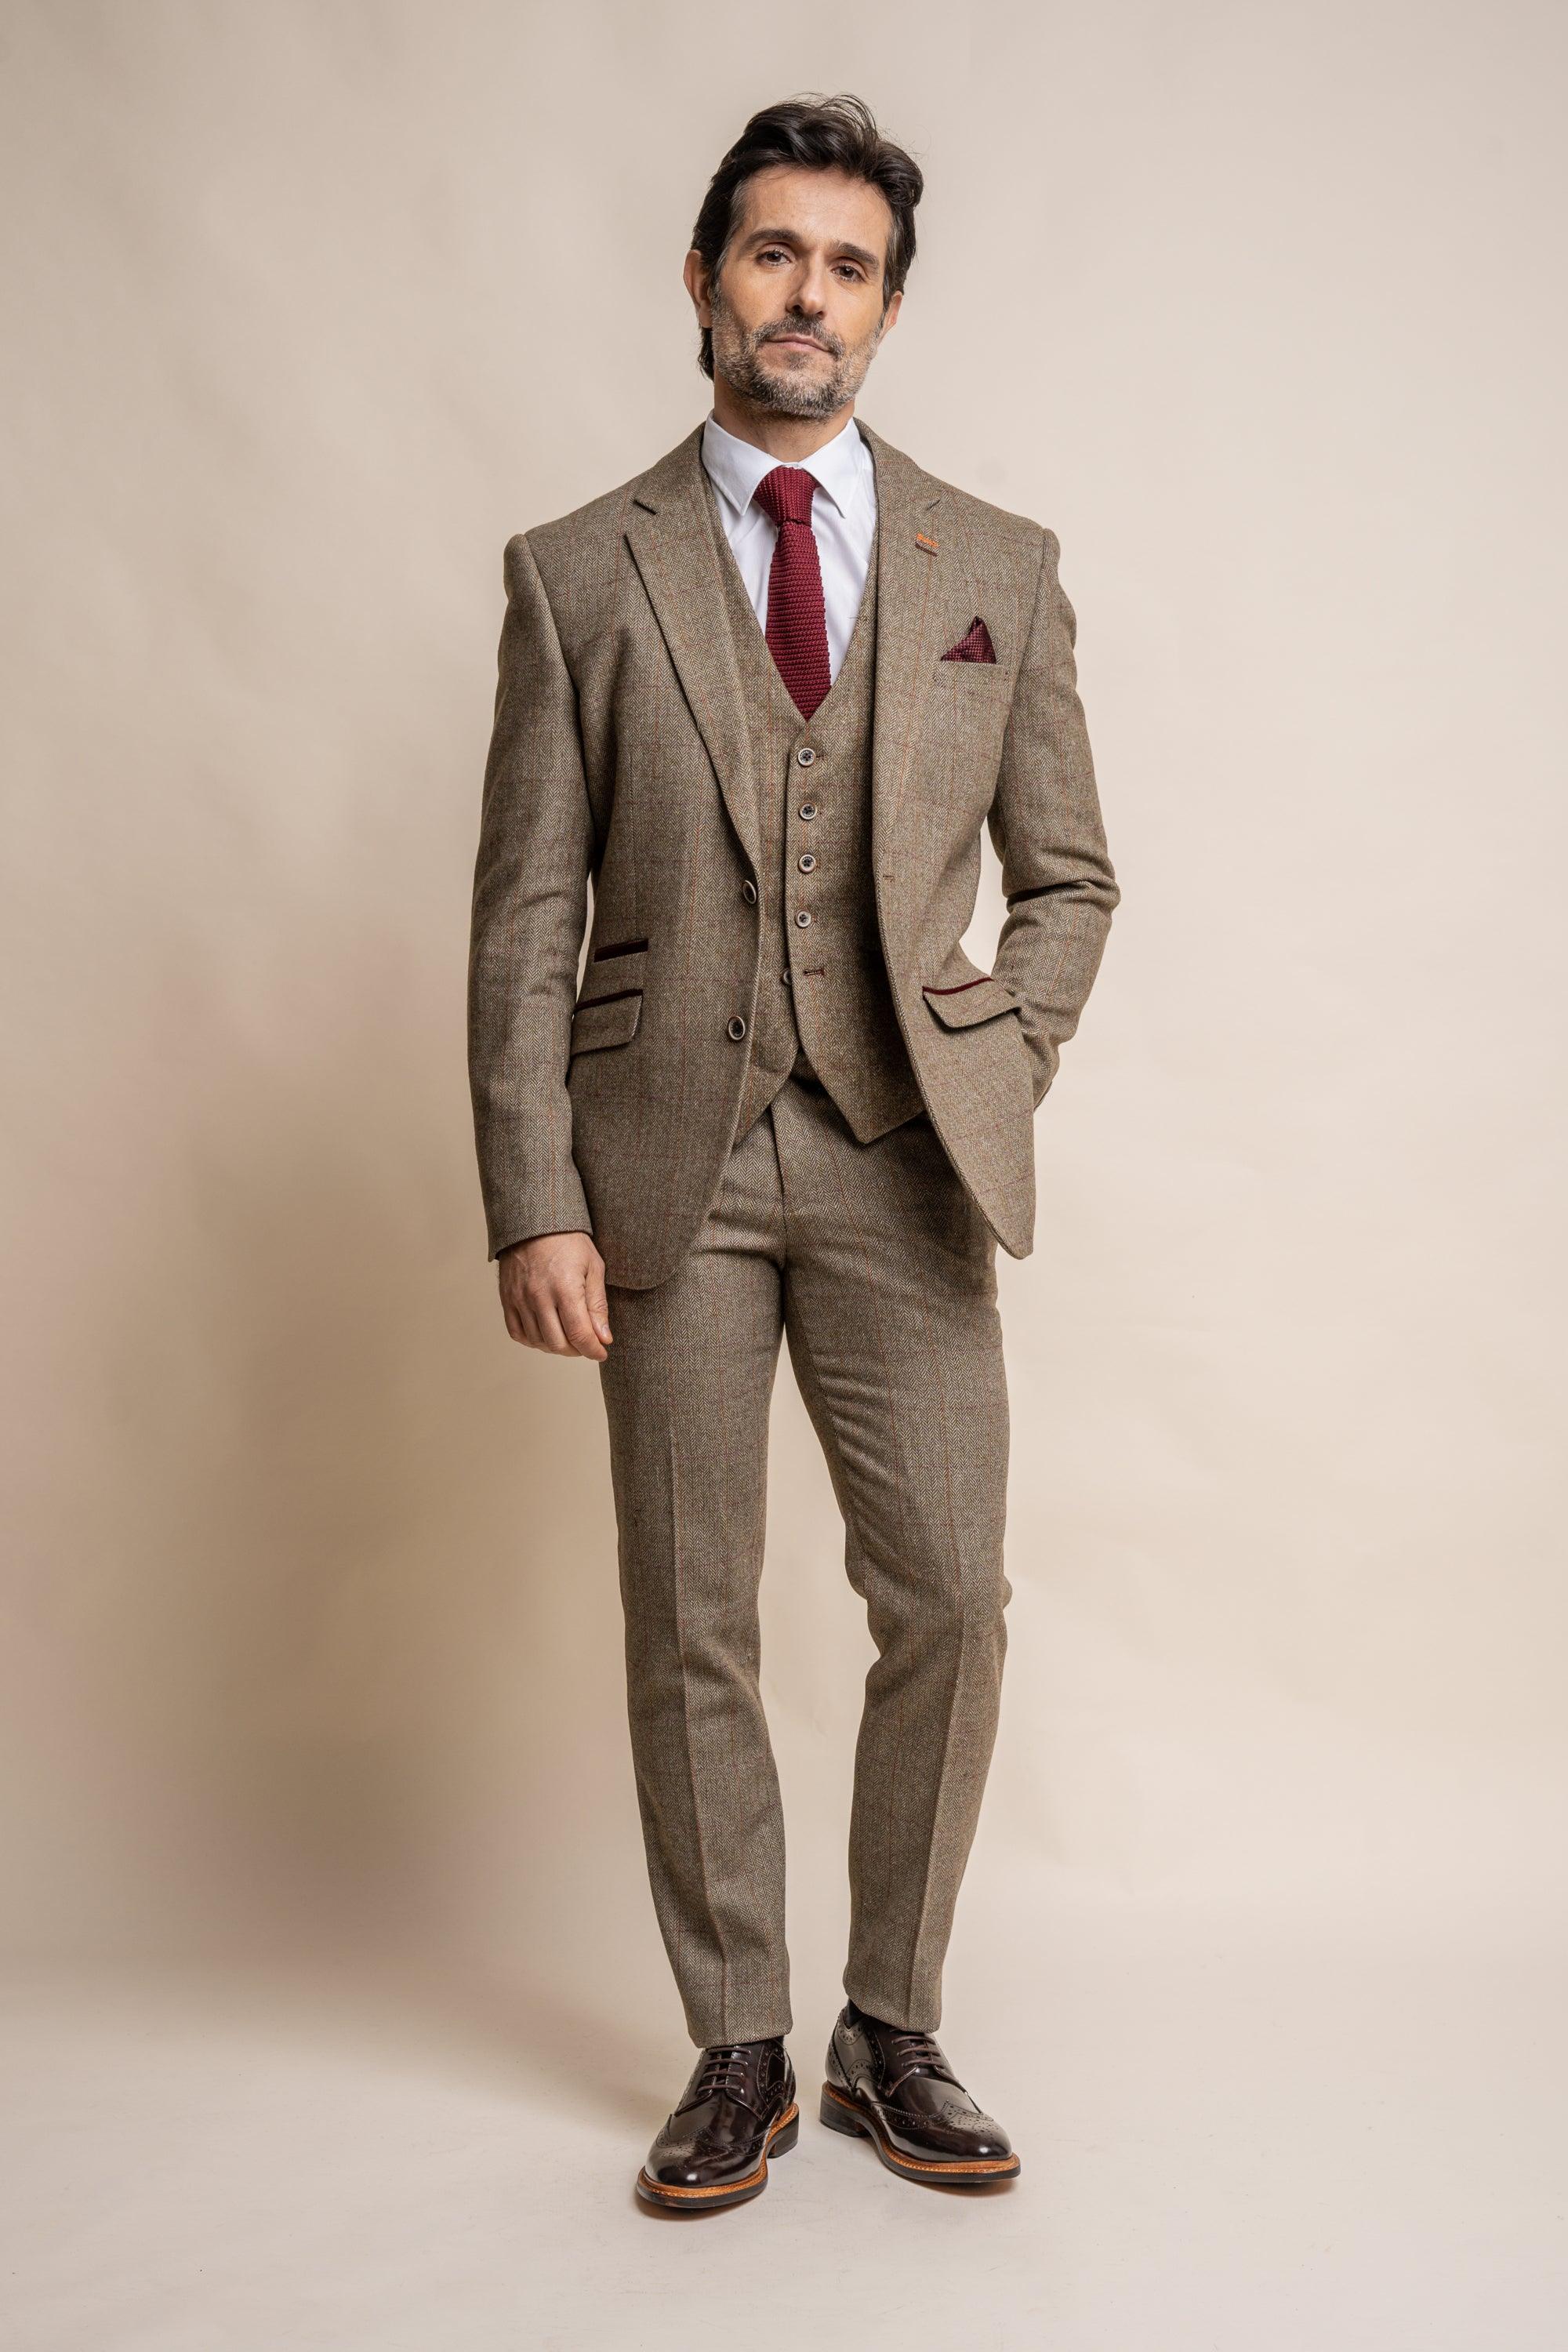 Gastson sage tweed three piece suit front